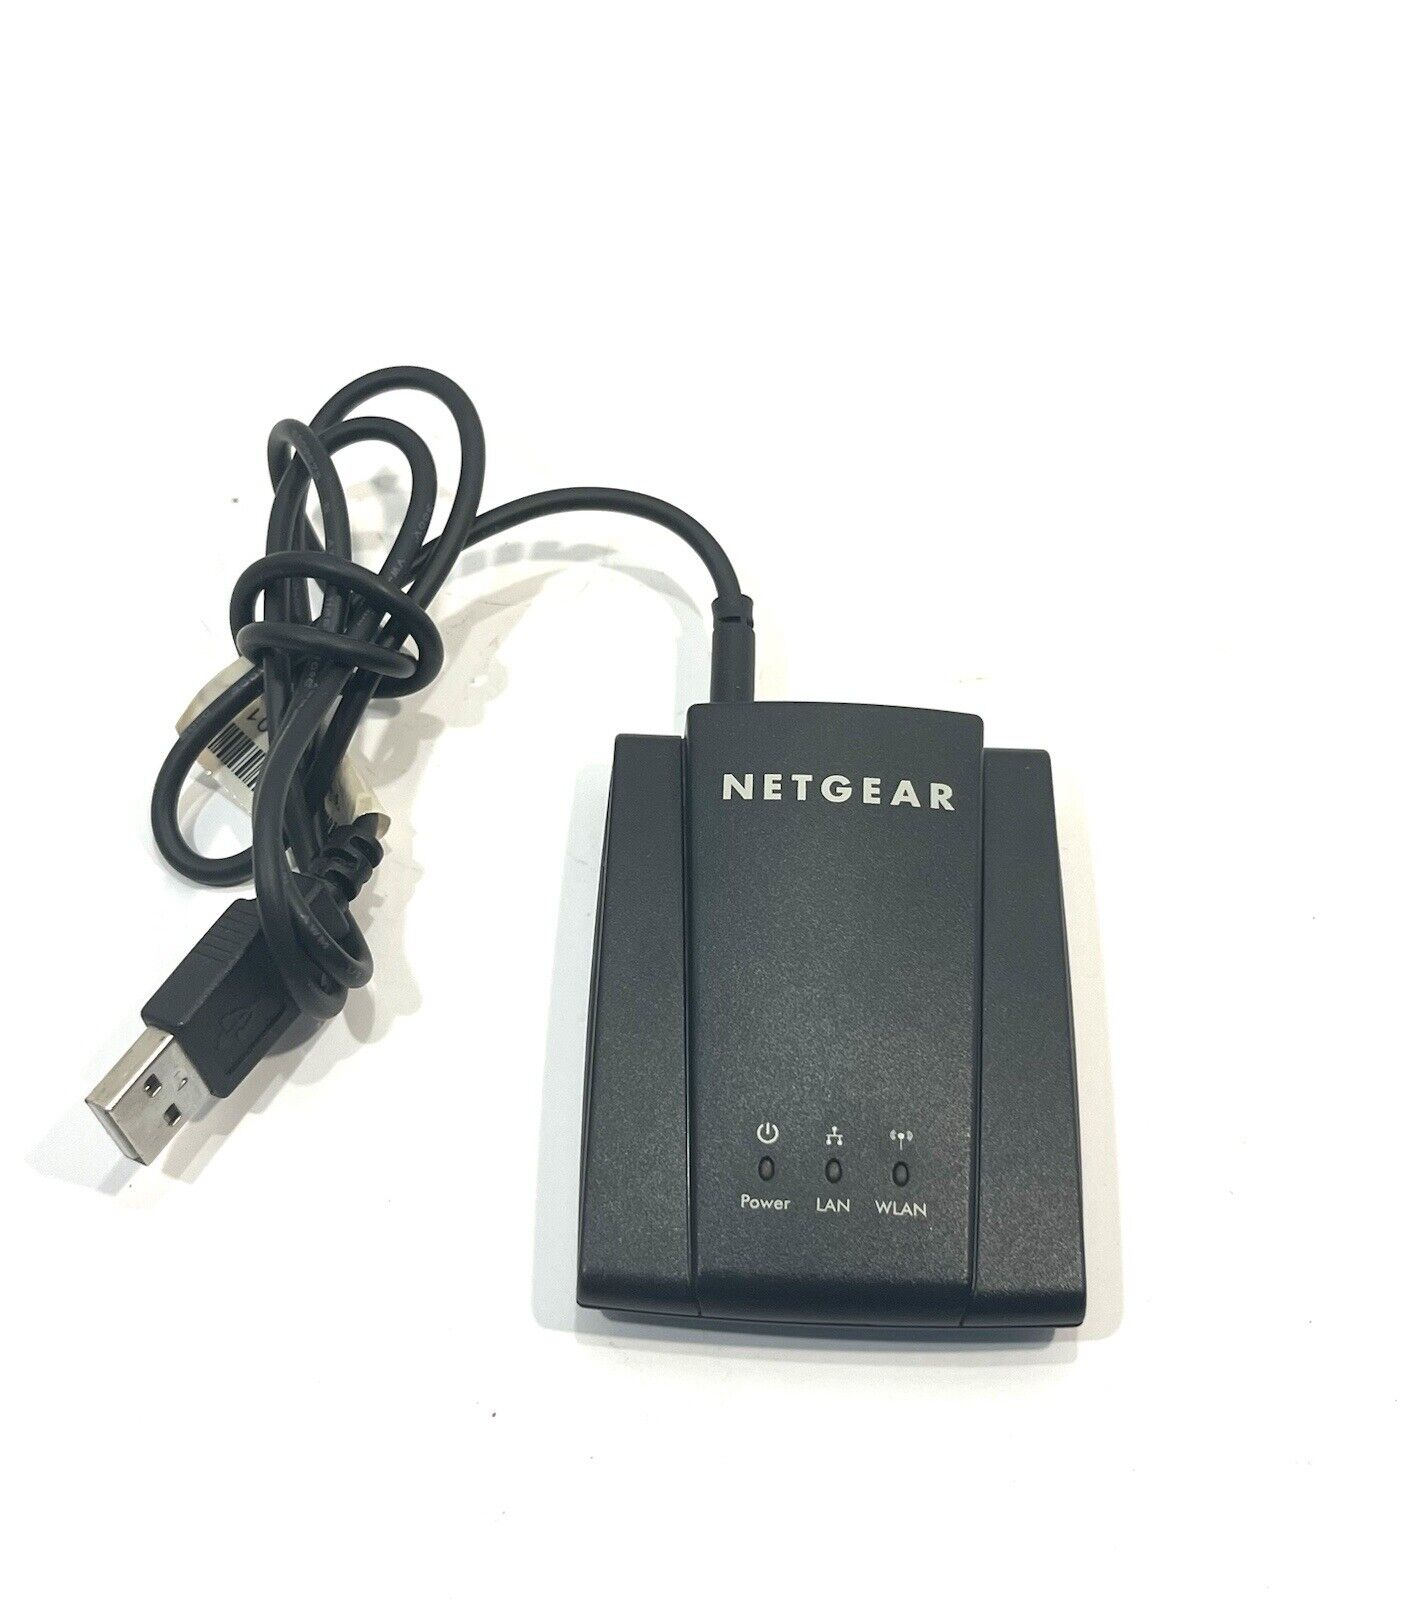 Netgear WNCE2001 Universal Wireless Adapter WiFi to Ethernet Bridge Unit & USB